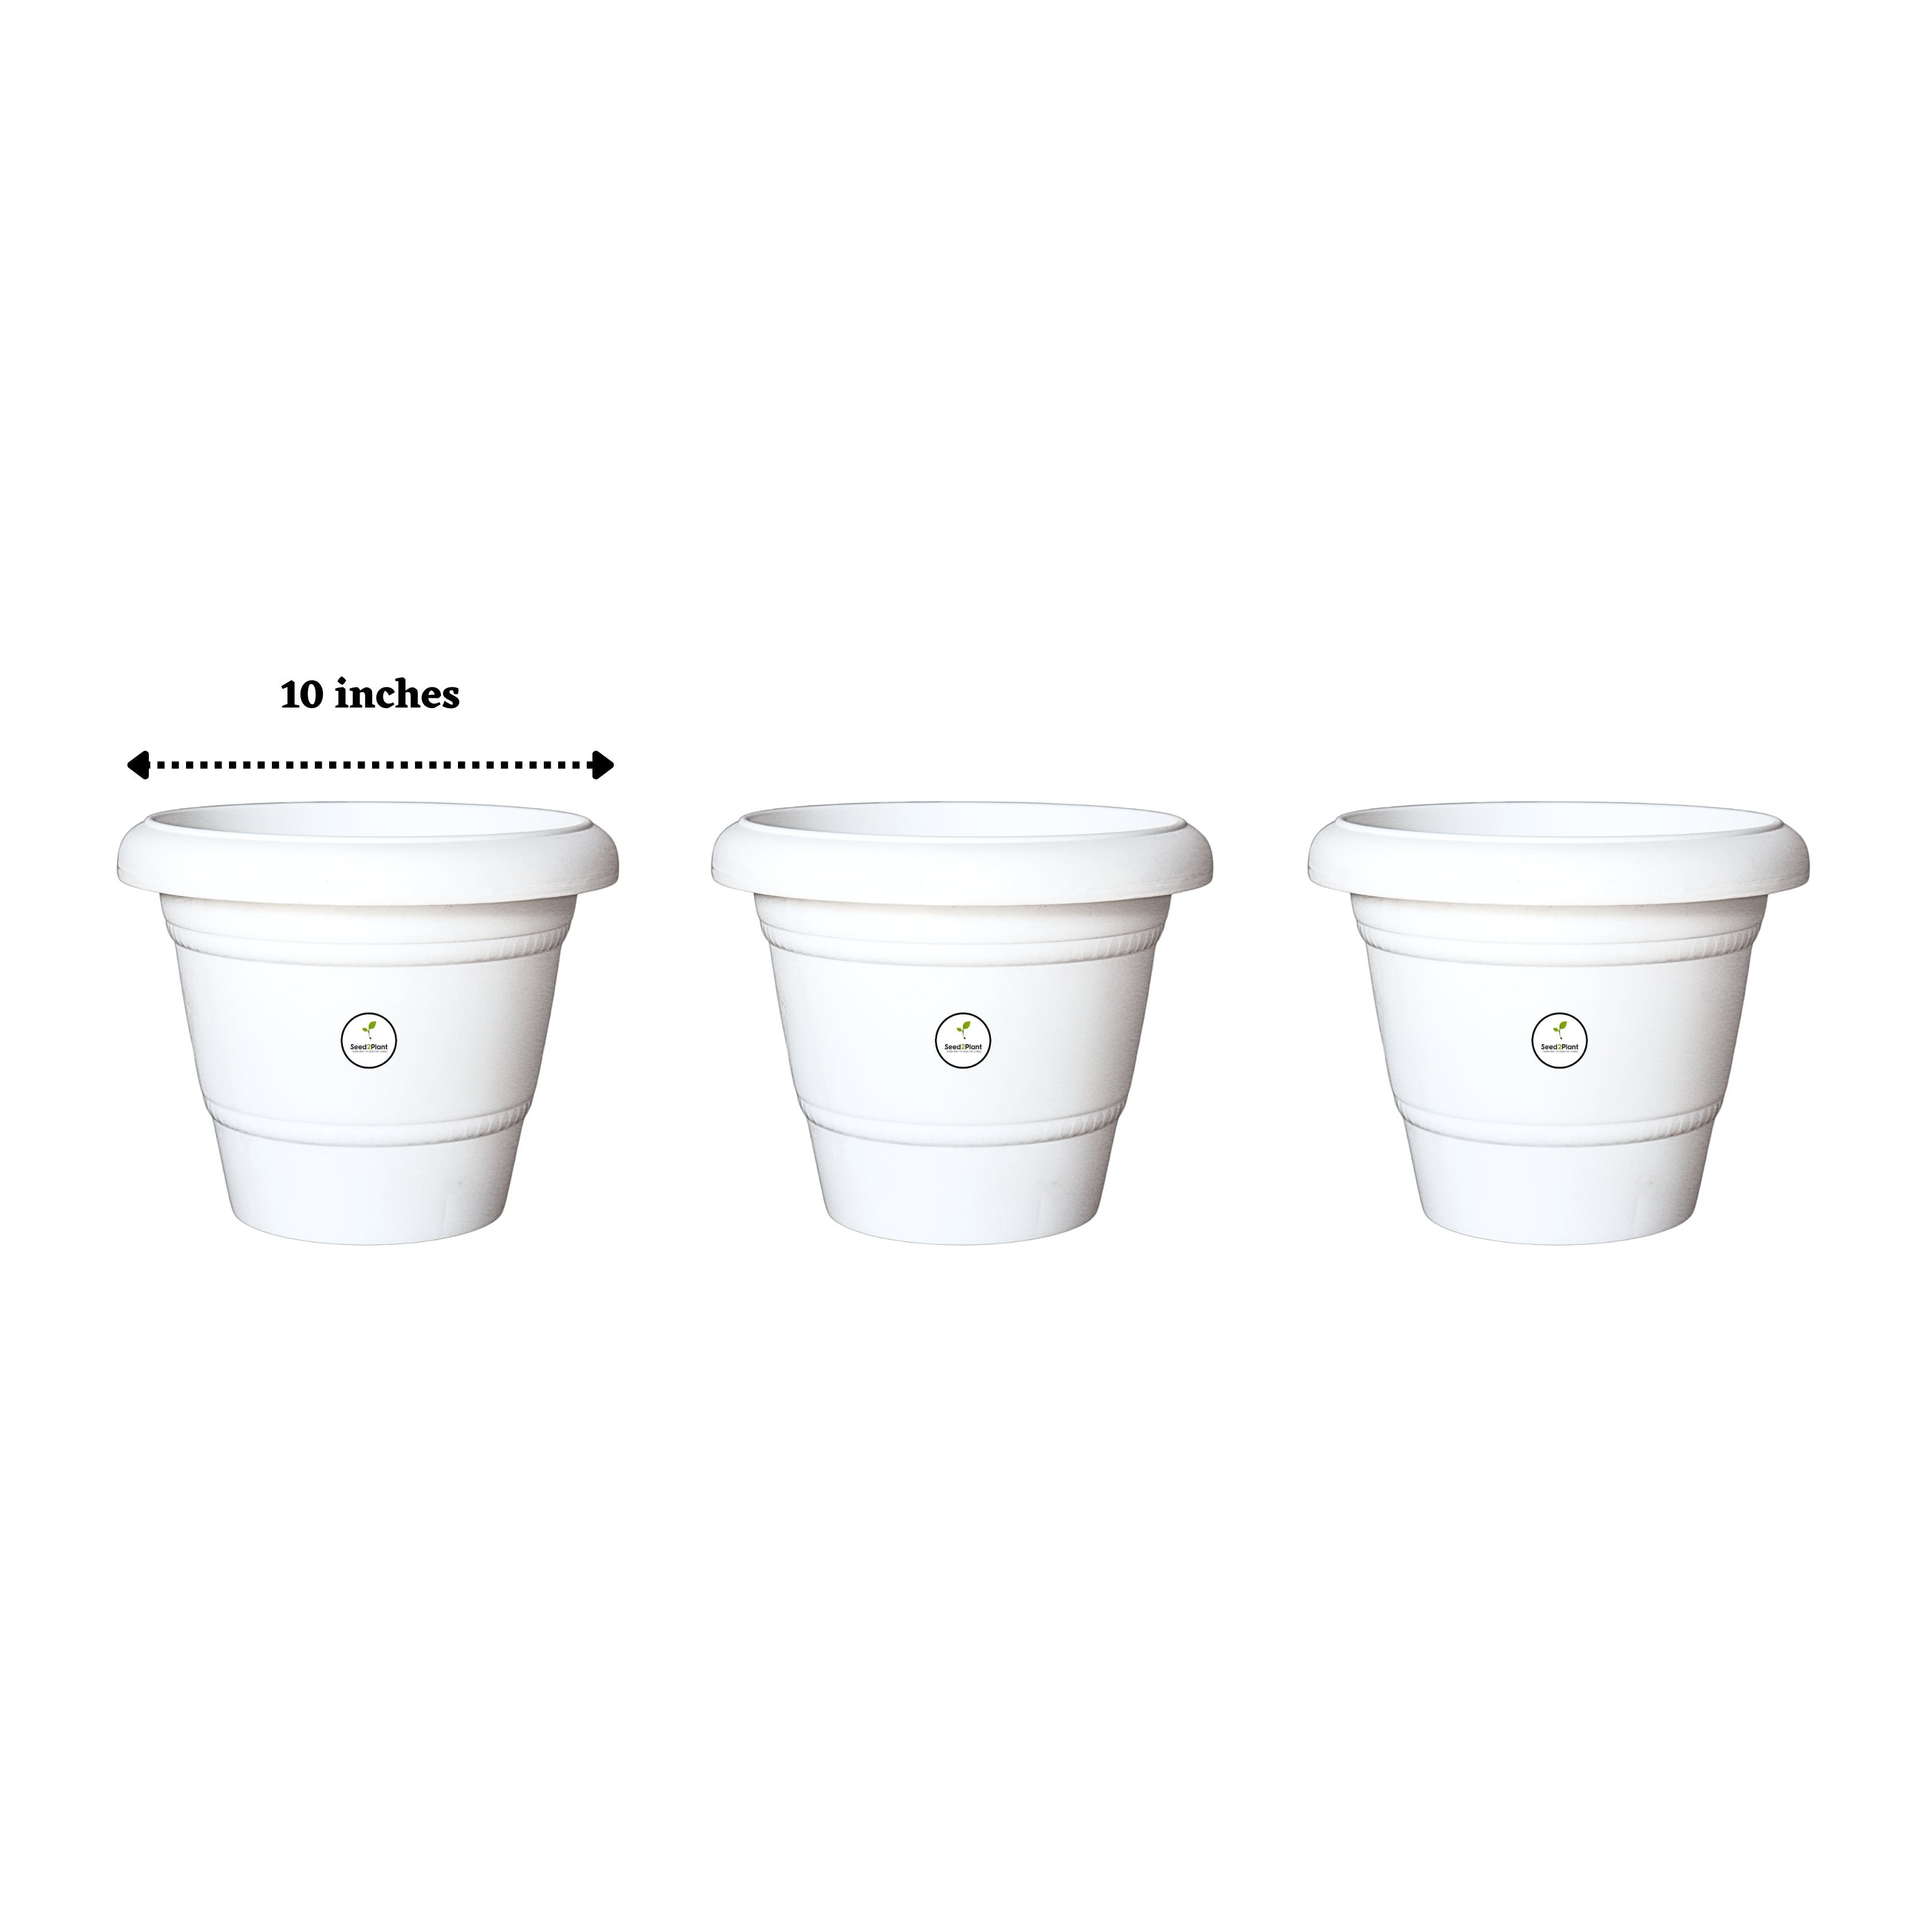 10 Inch Plastic Pots UV Treated - White Colour